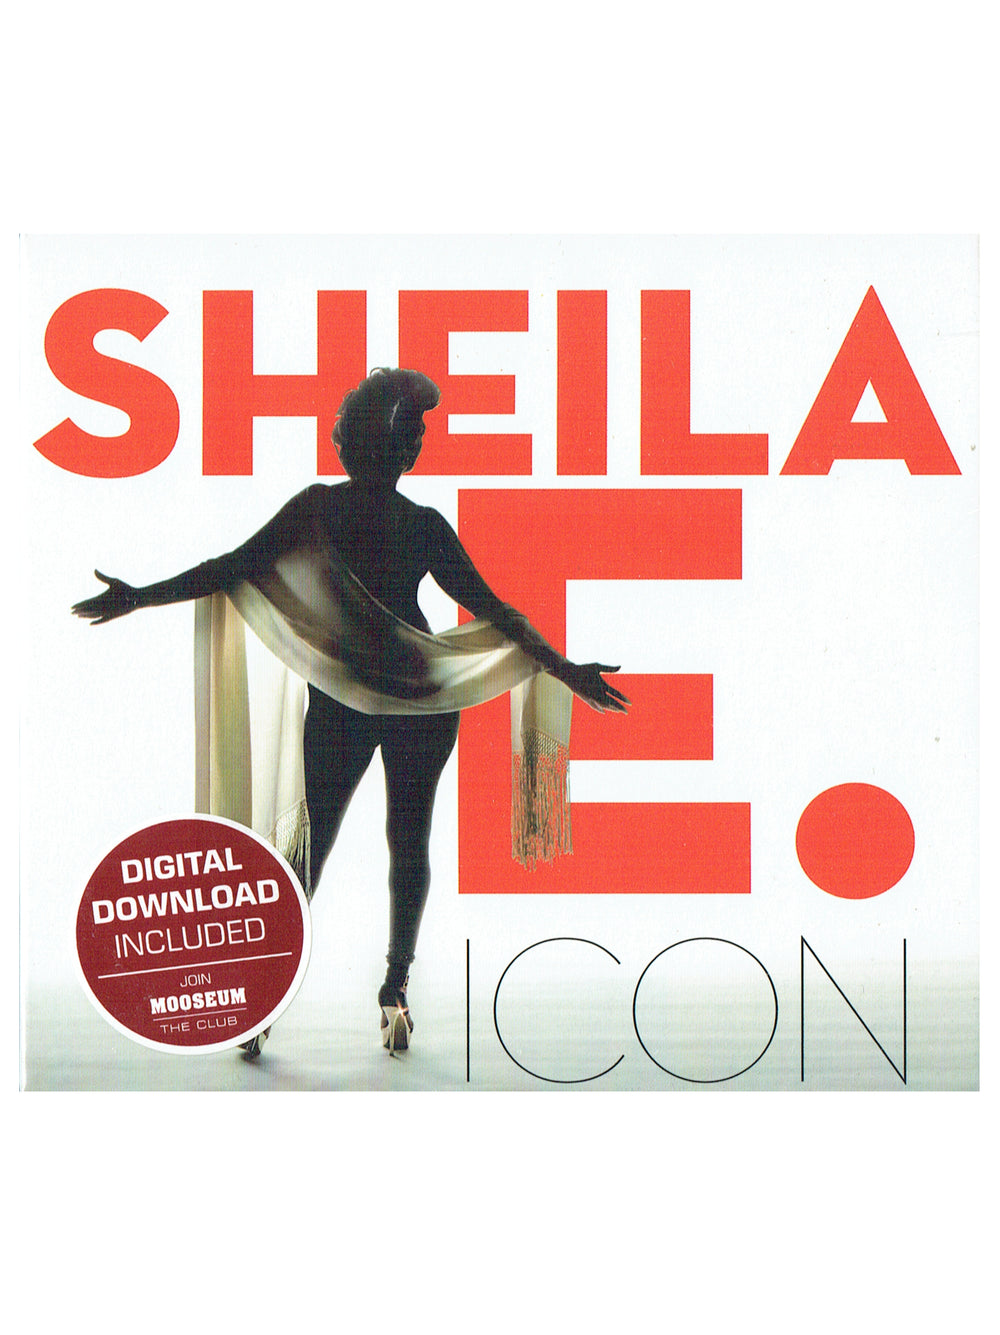 Sheila E ICON CD Album Gatefold Sleeve 2013 Release Pre-Loved Prince SW